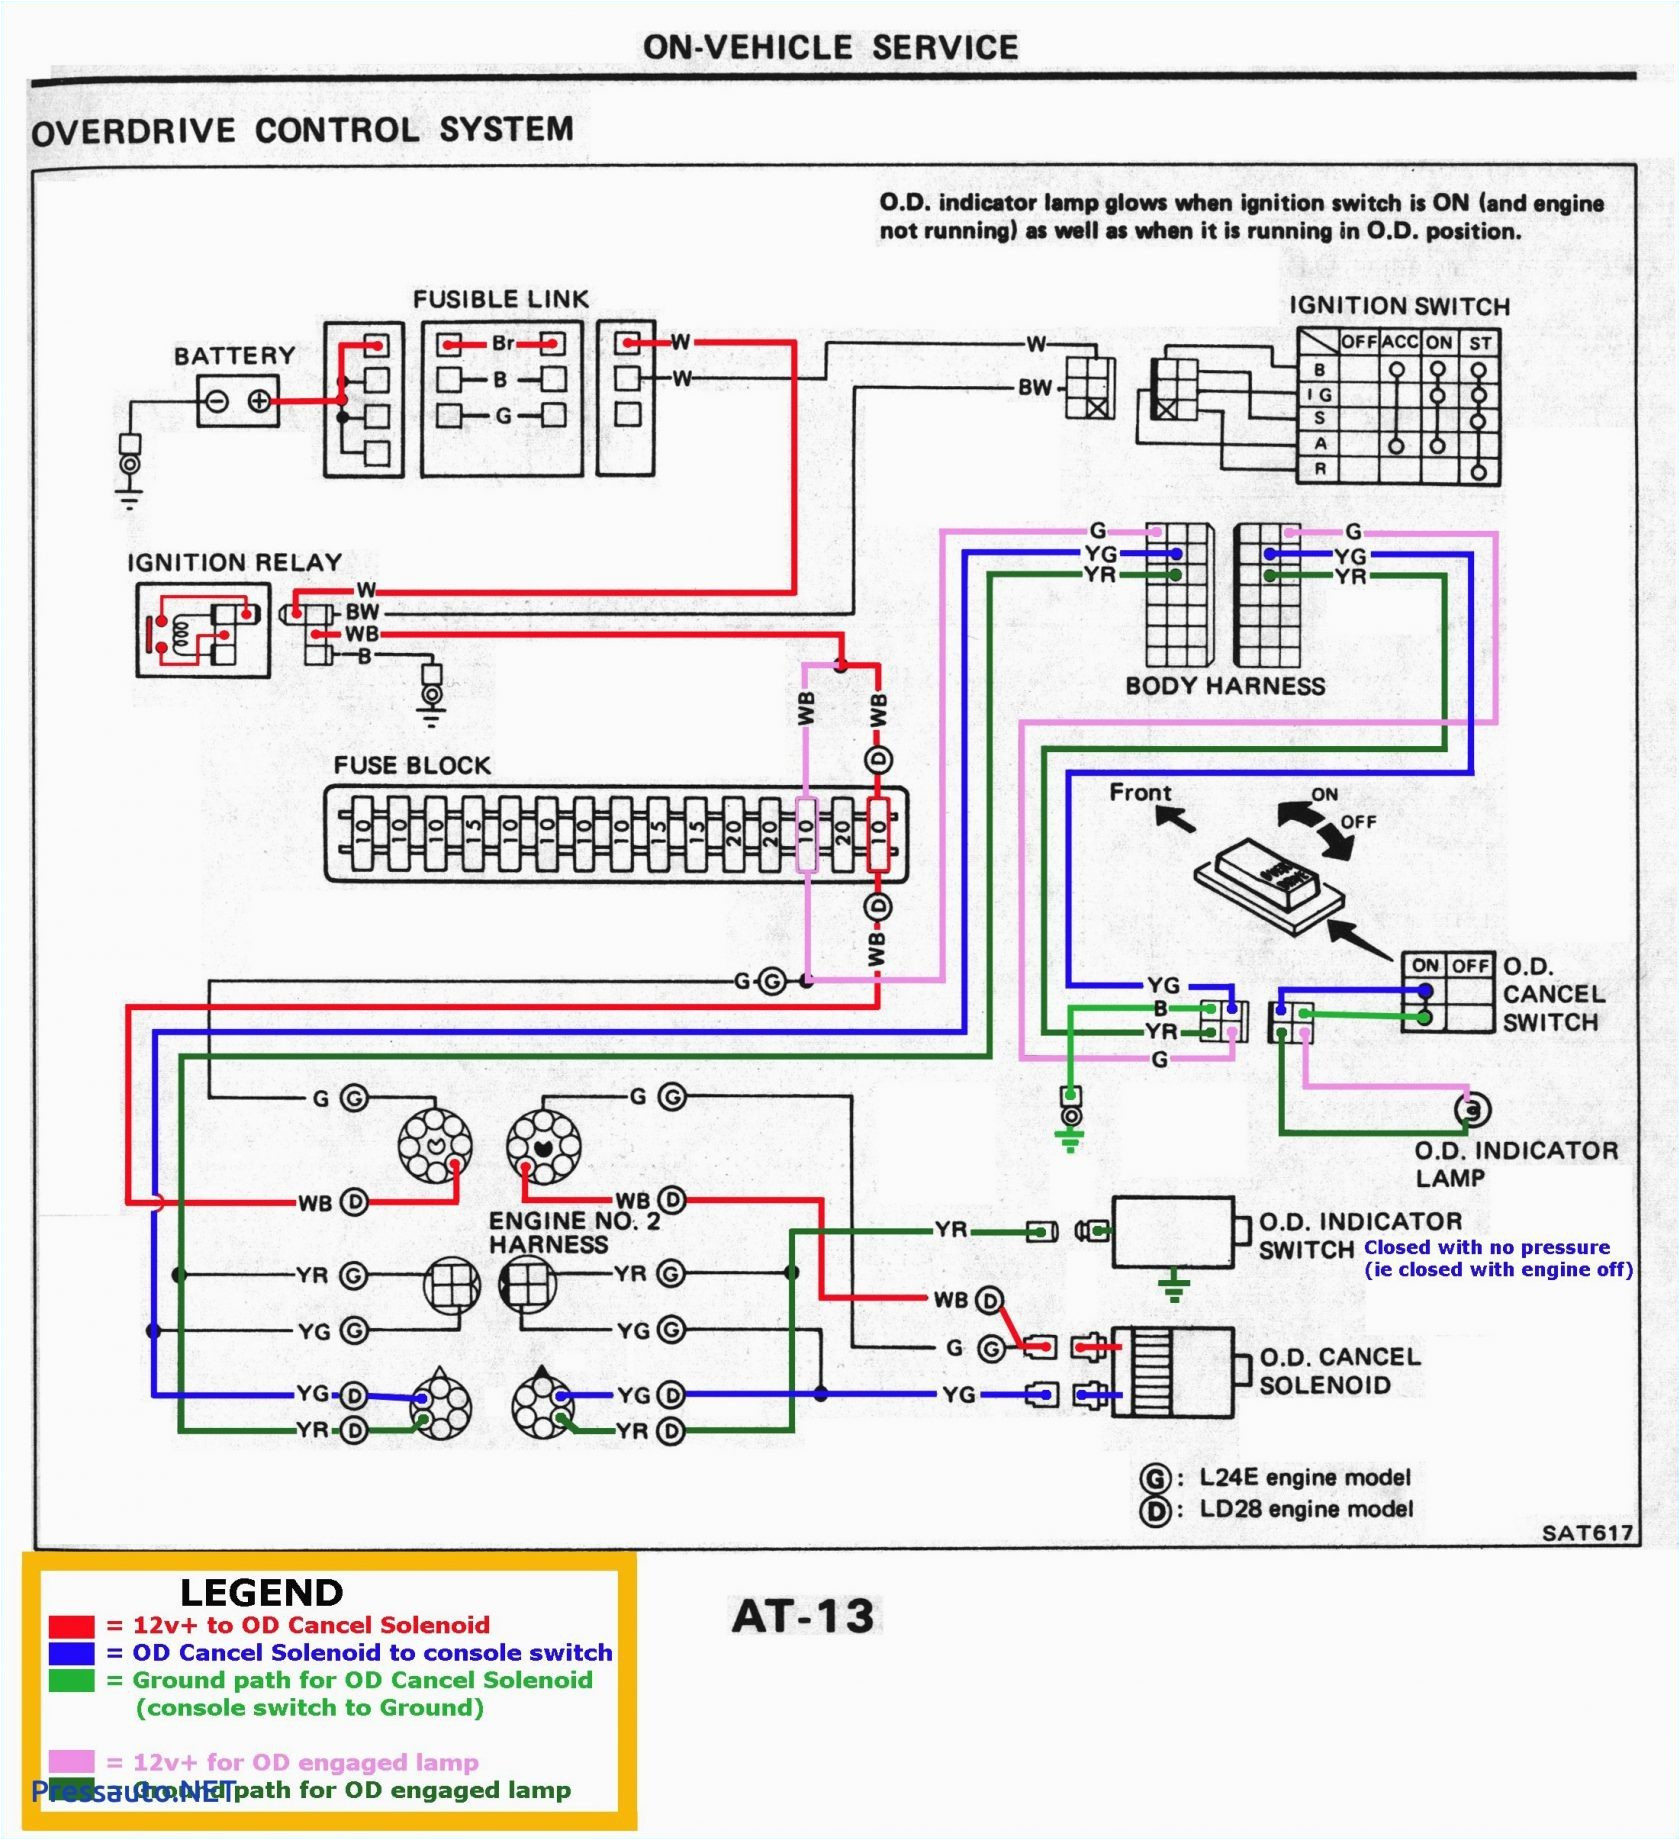 wiring diagrams free weebly wiring diagram expert weebly free wiring diagrams